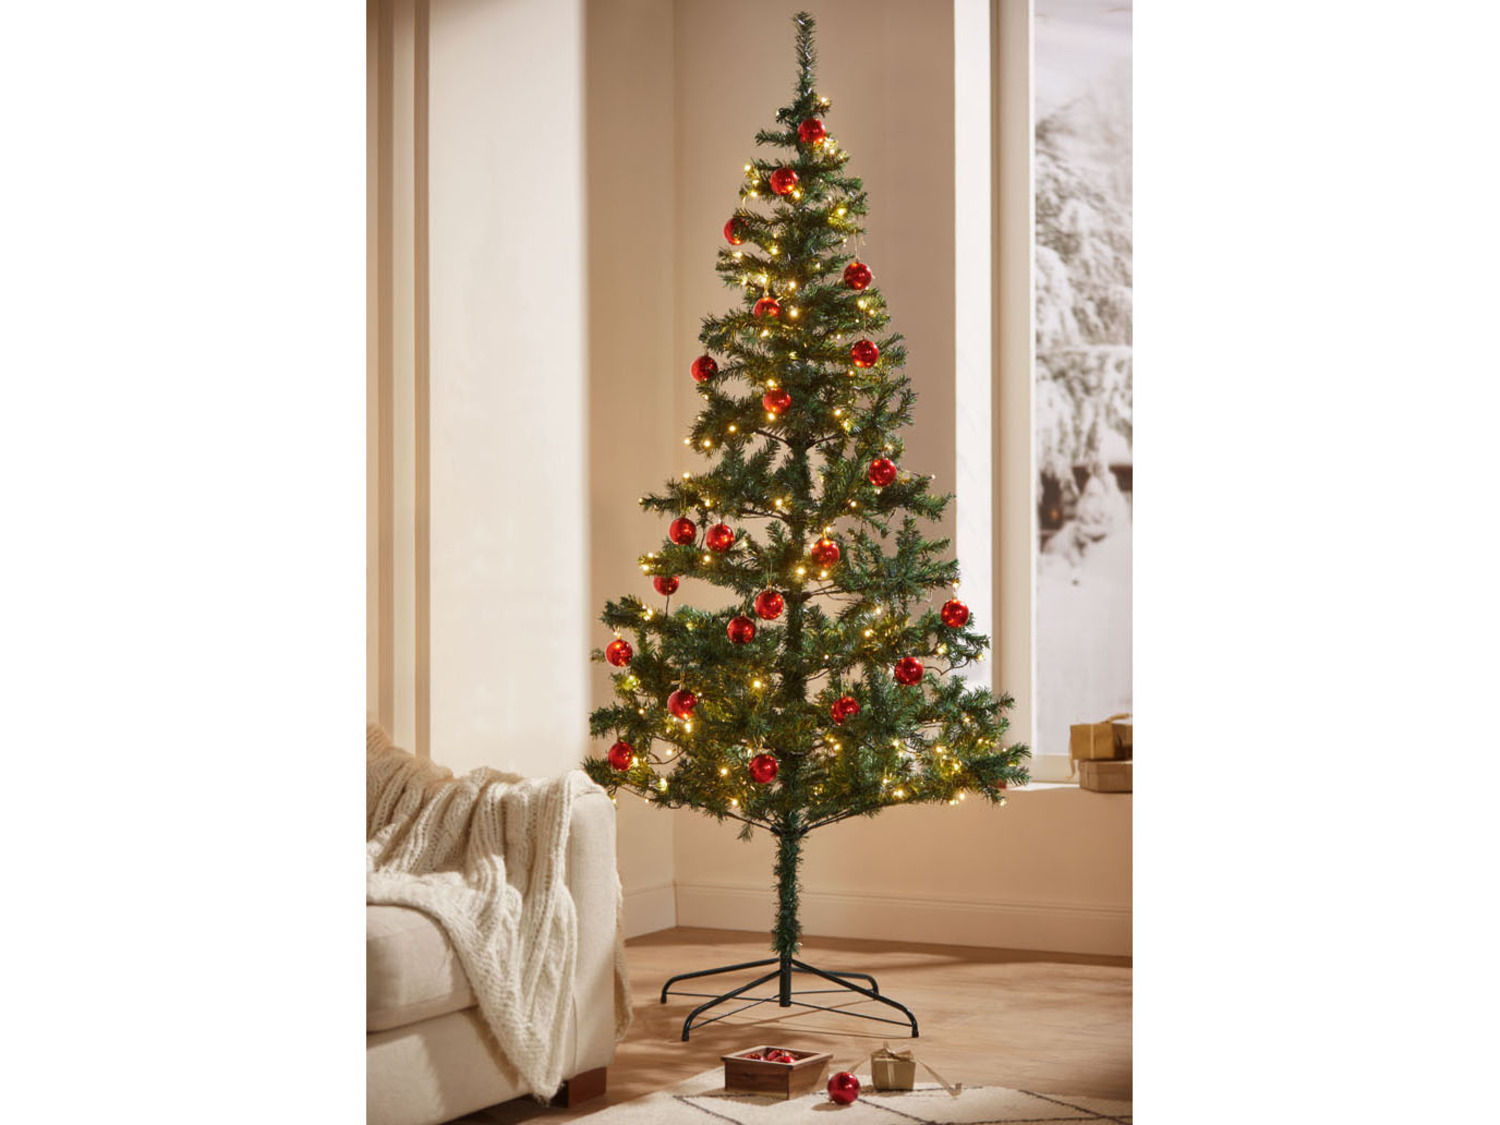 210 LEDs LIVARNO 180 cm, LED-Weihnachtsbaum, mit home